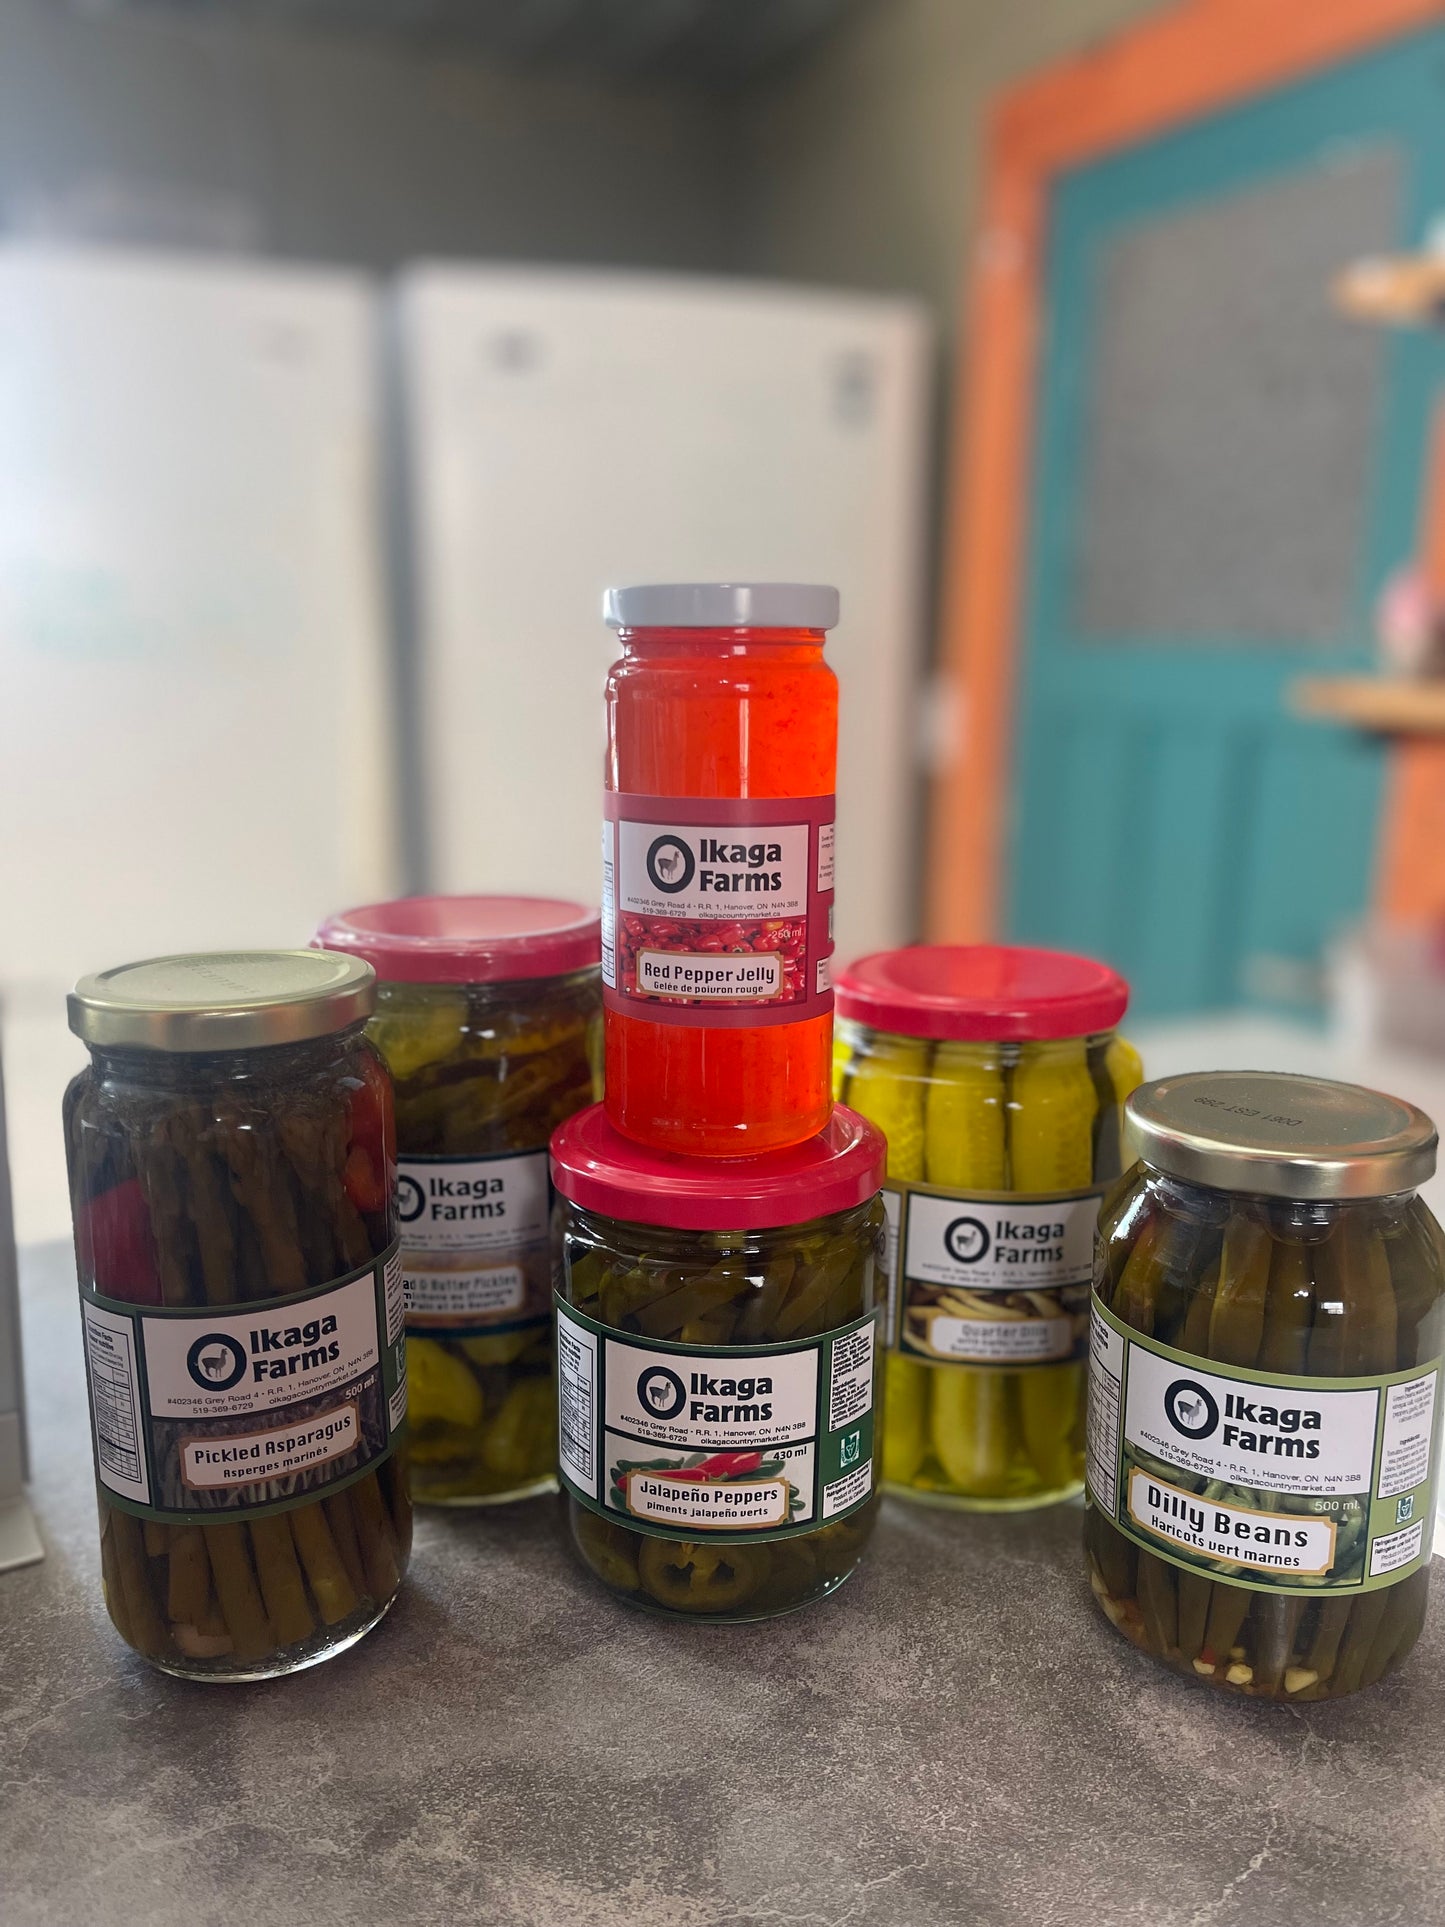 Olkaga Country Market - Pickles & Preserves